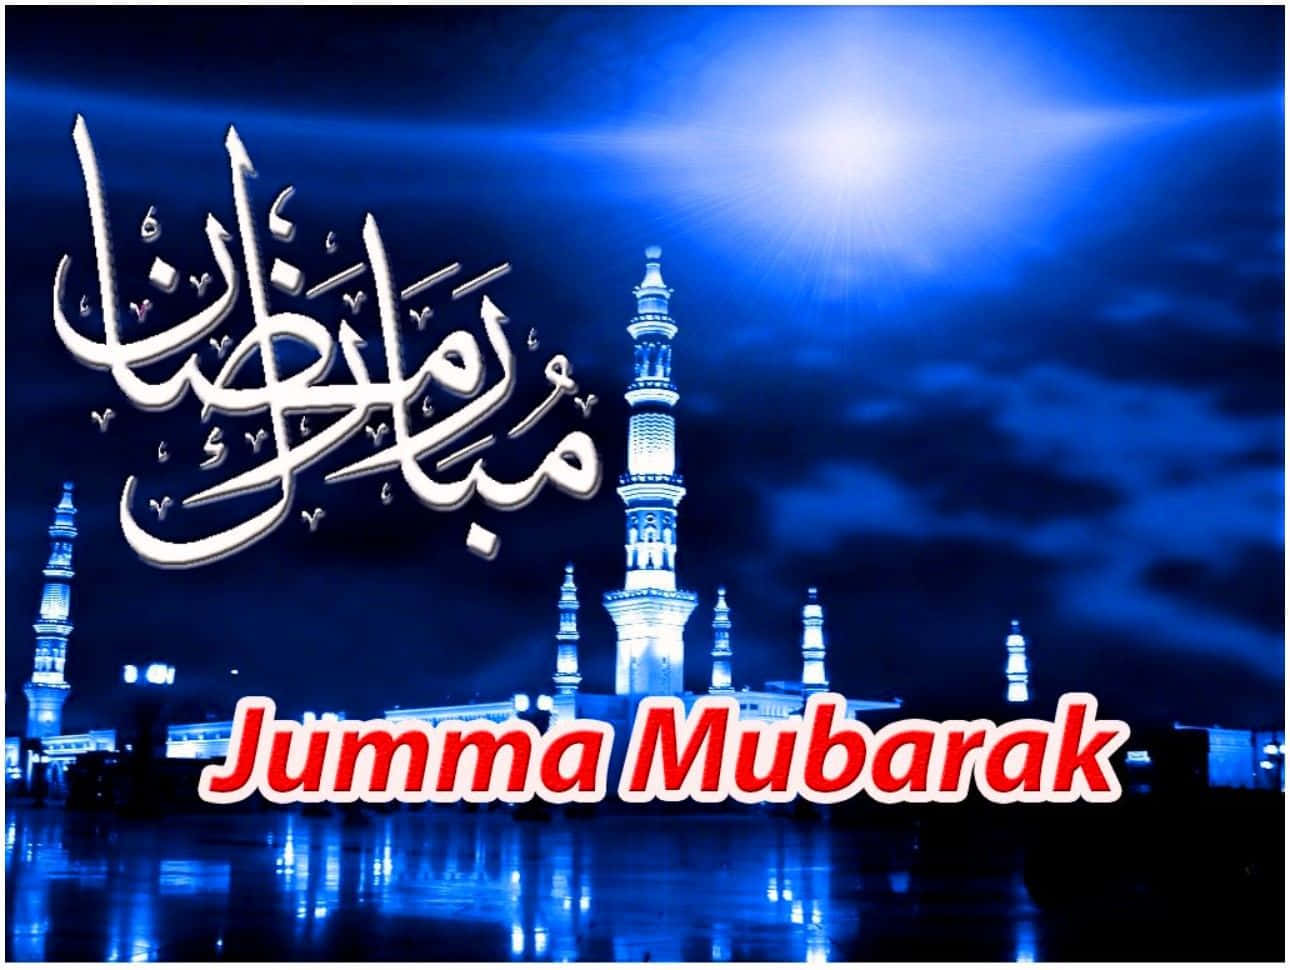 Jumma Mubarak - A Beautiful Islamic Wallpaper Background